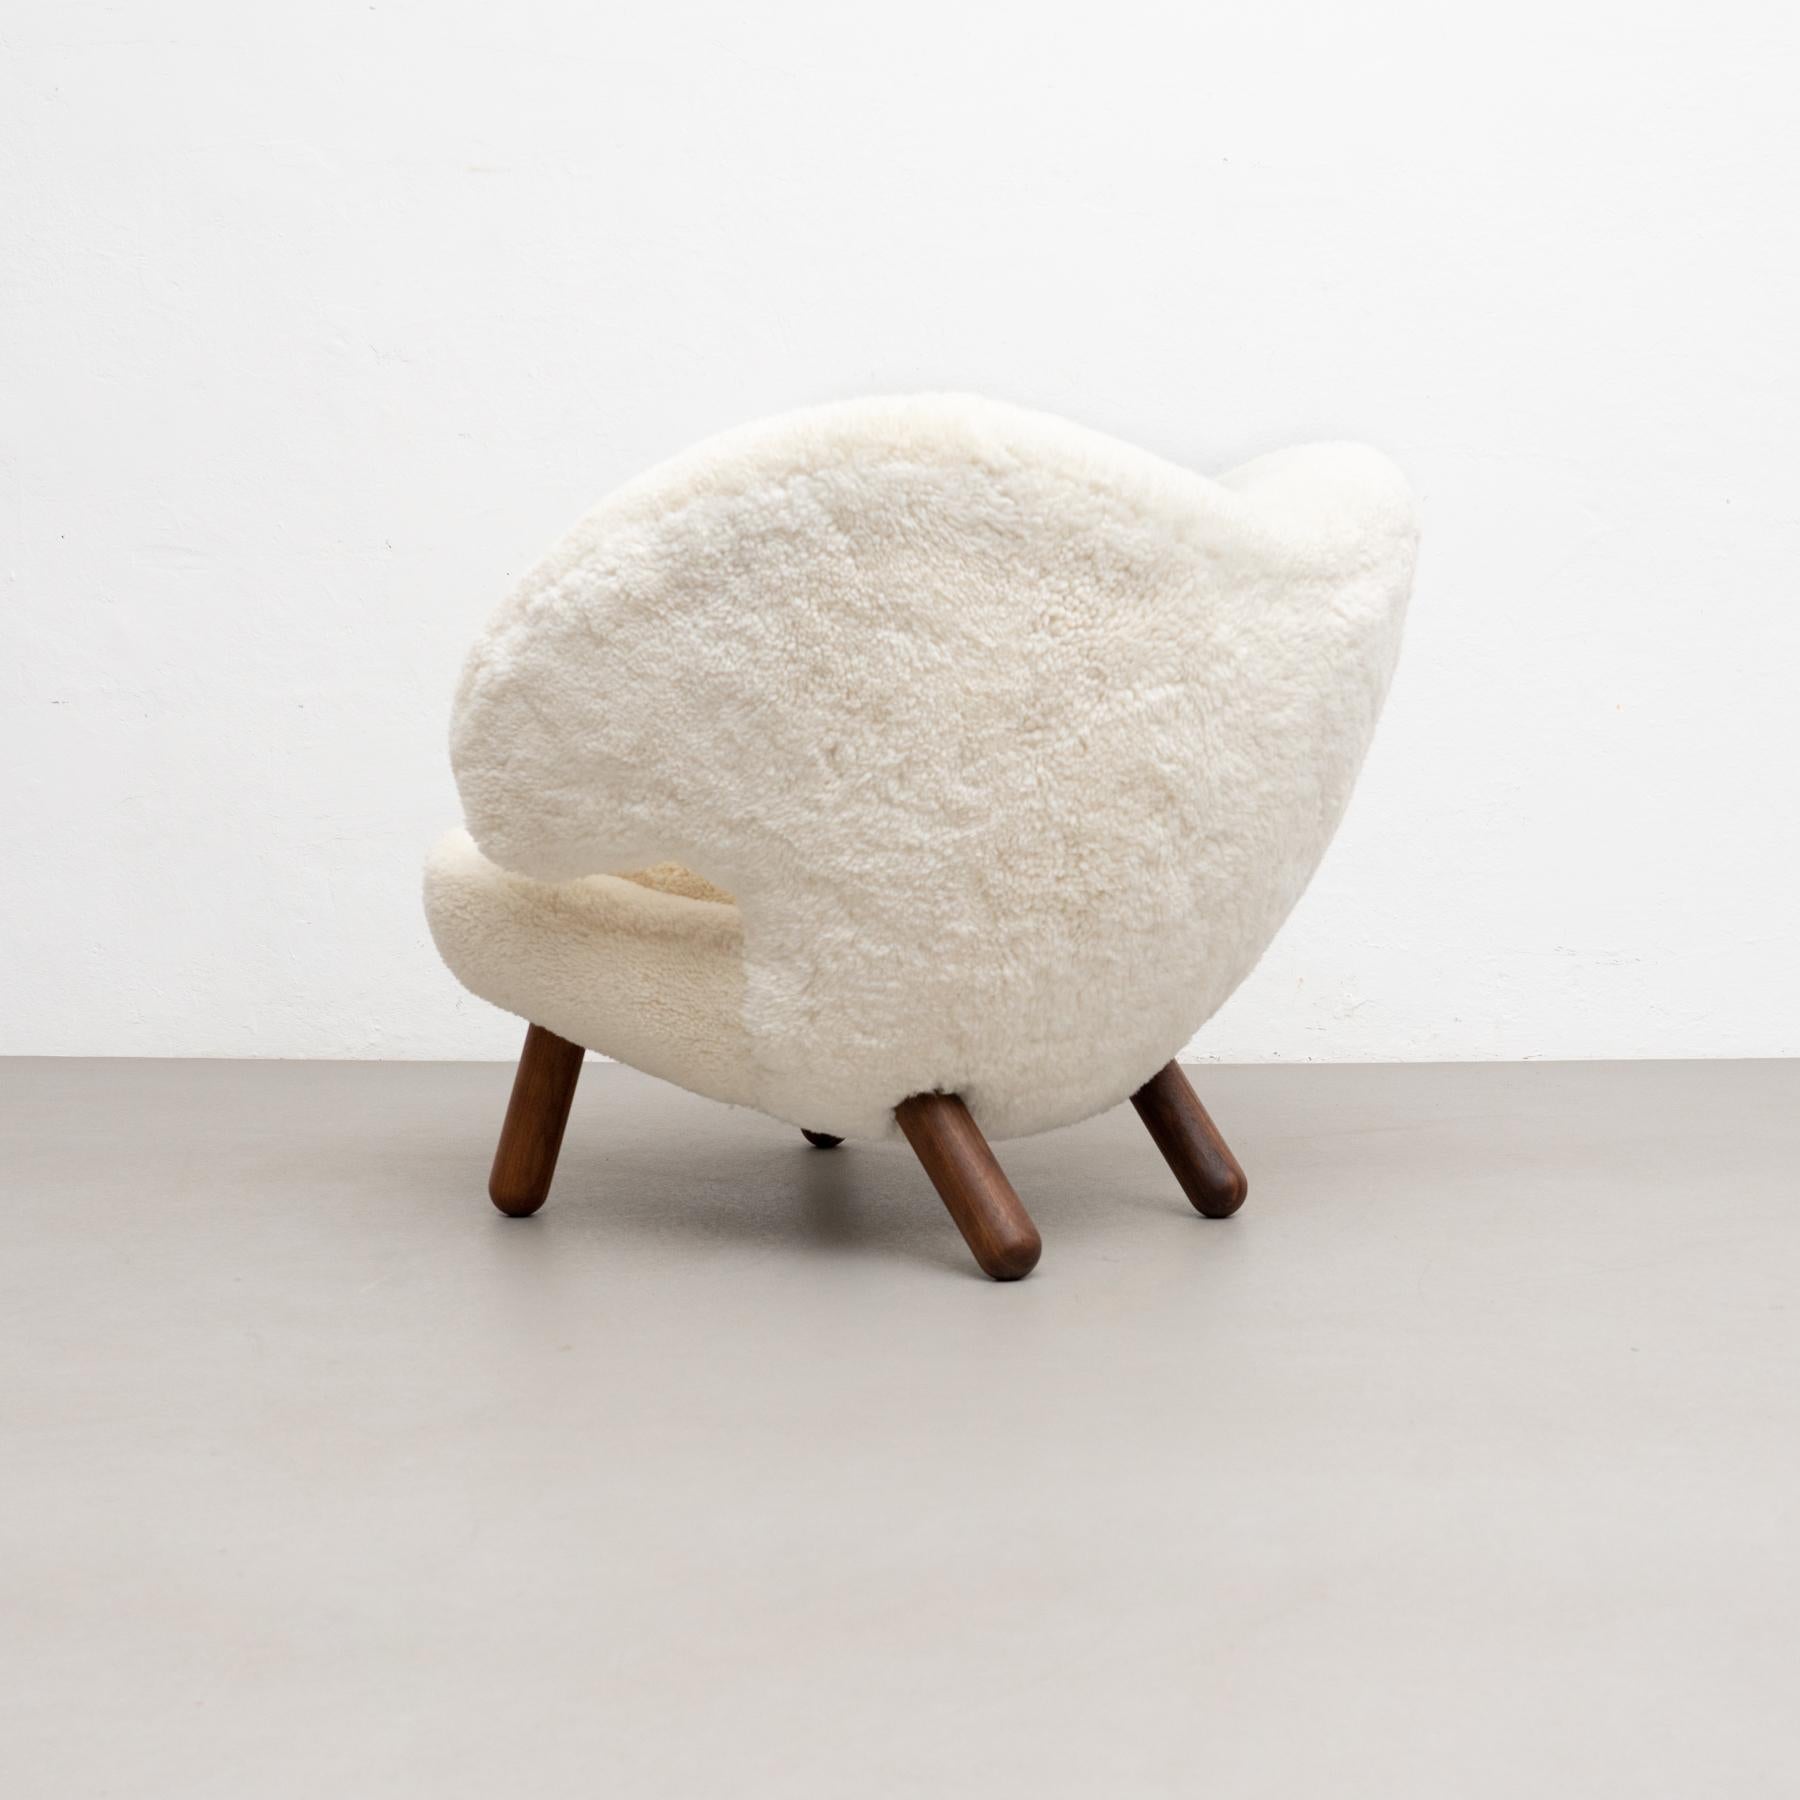 Wood Finn Juhl Pelican Chair Upholstered in Offwhite Sheepskin For Sale